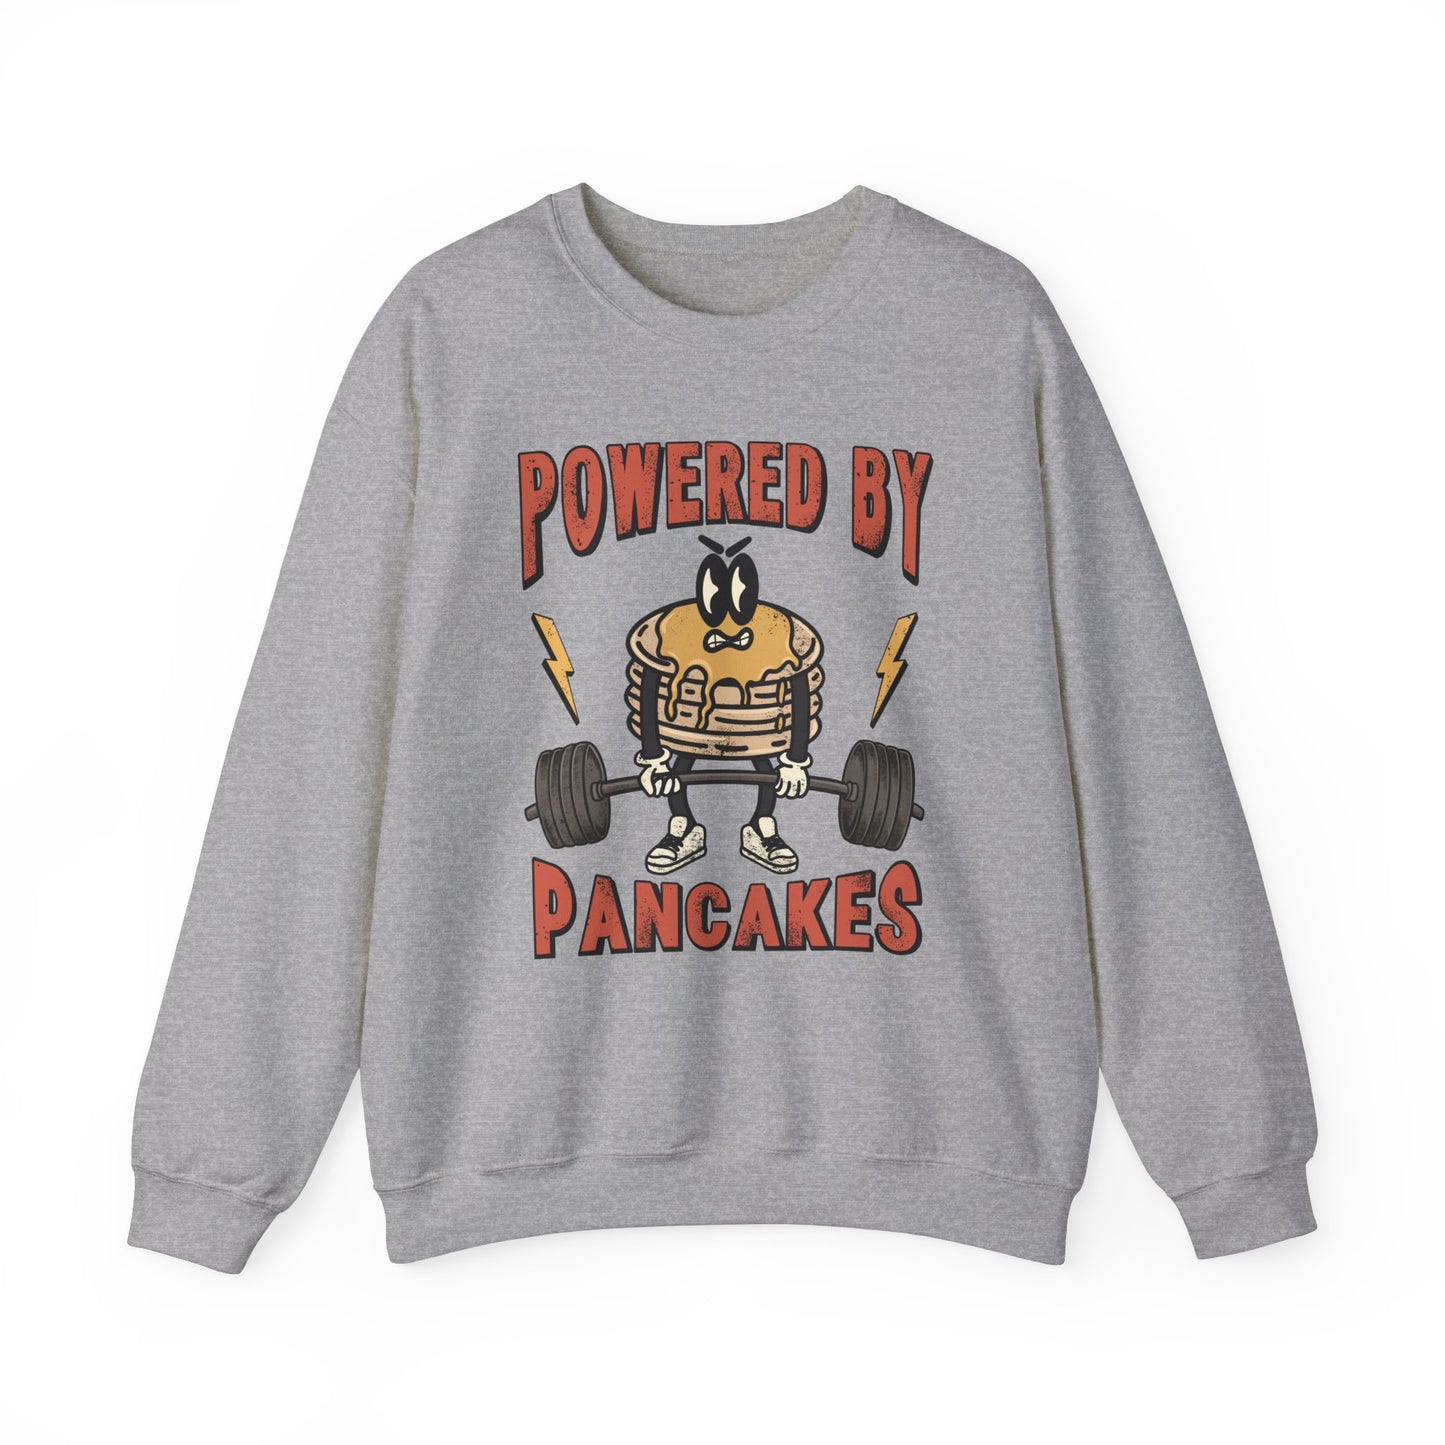 Powered by Pancakes Crewneck Sweatshirt